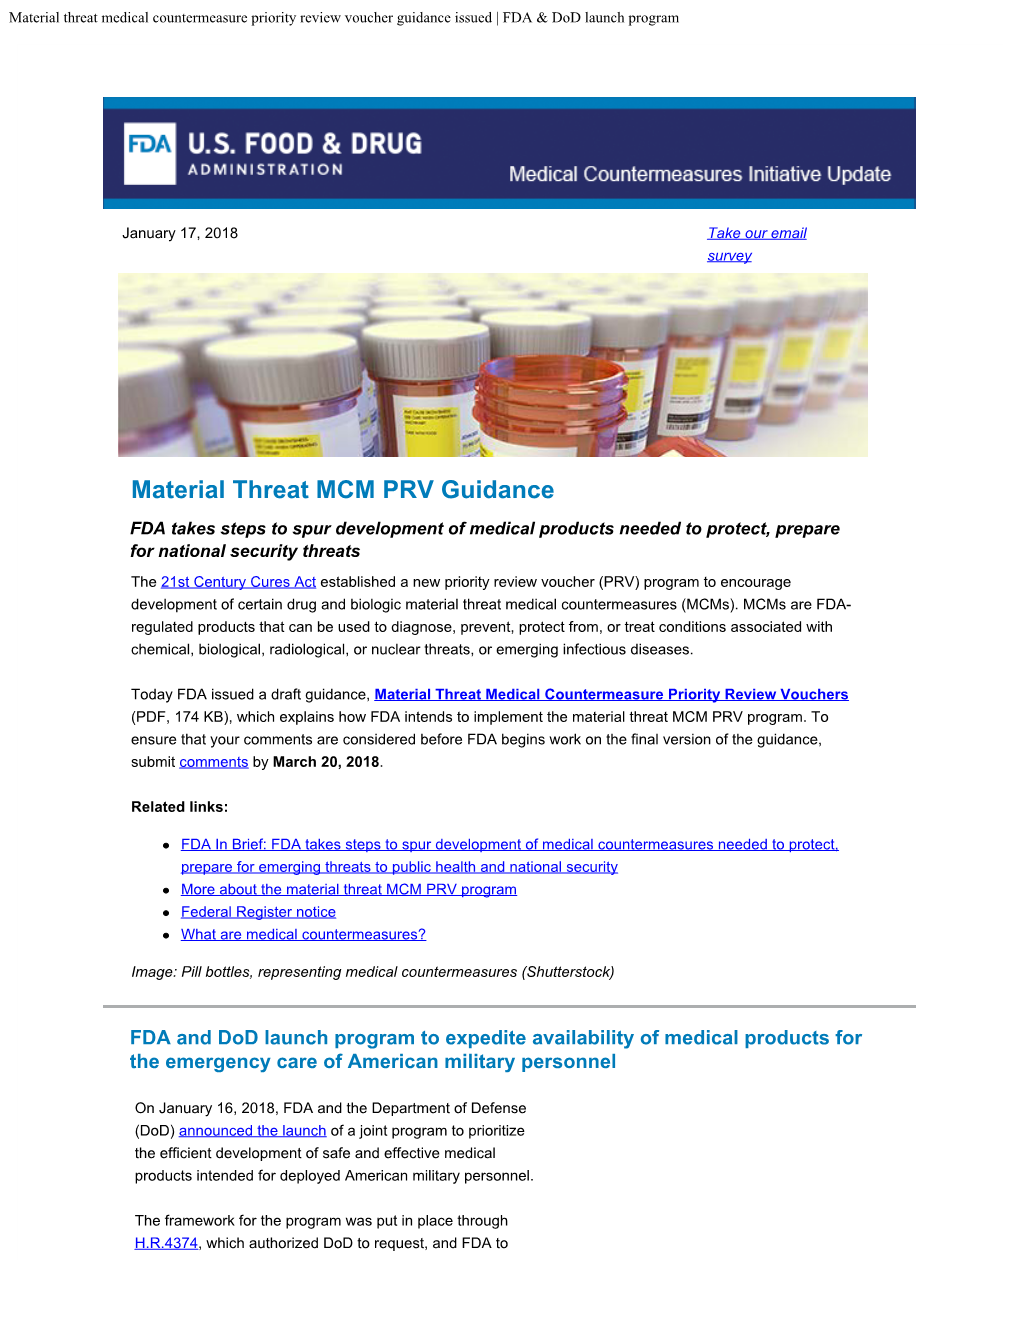 Material Threat MCM PRV Guidance